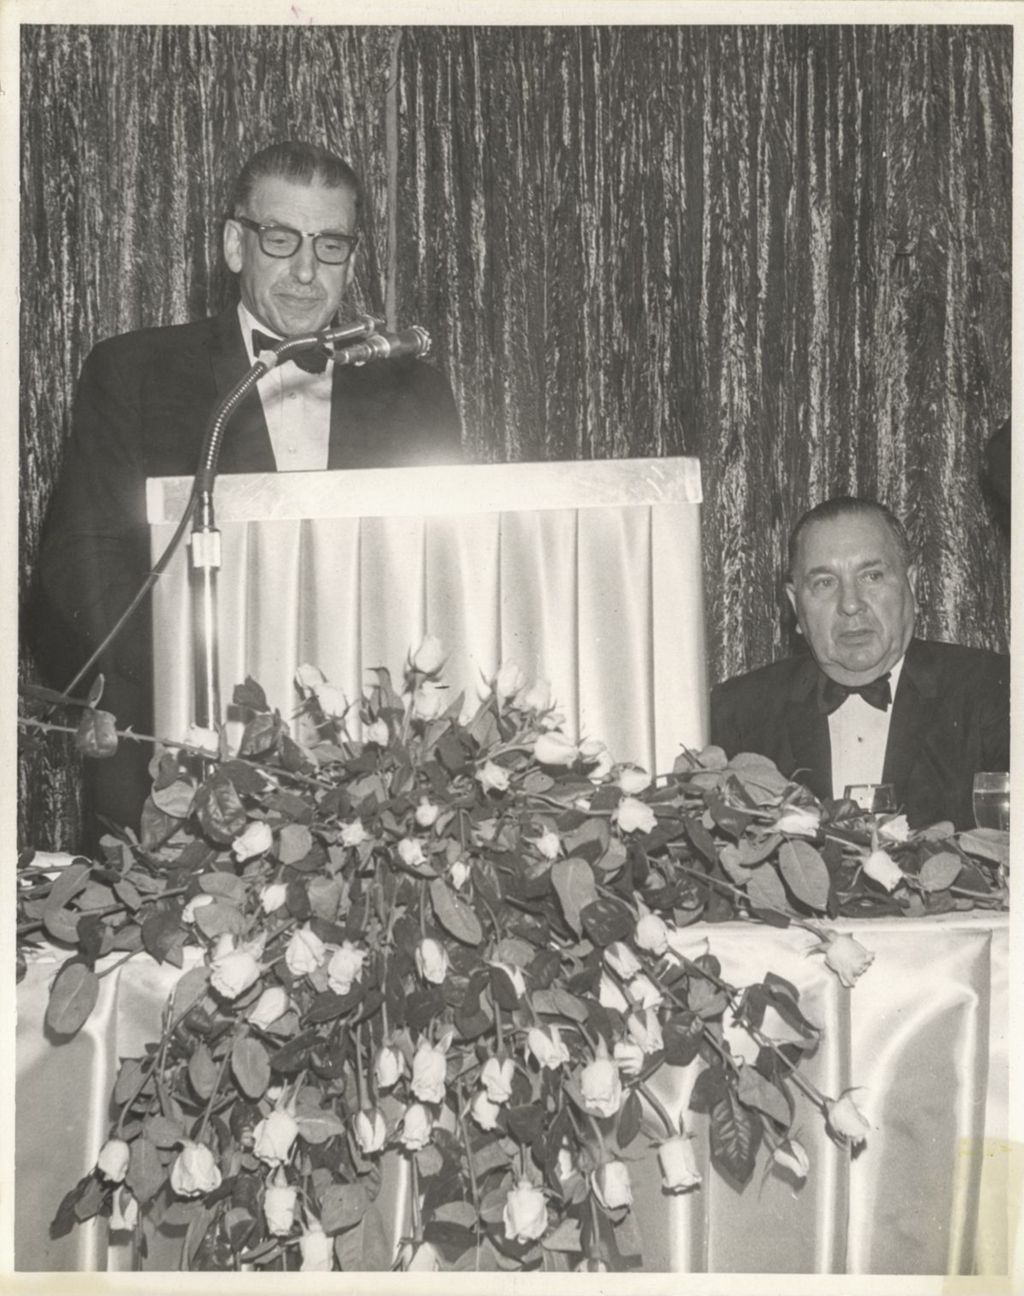 Miniature of Irish Fellowship Club of Chicago Annual Banquet, speaker at podium